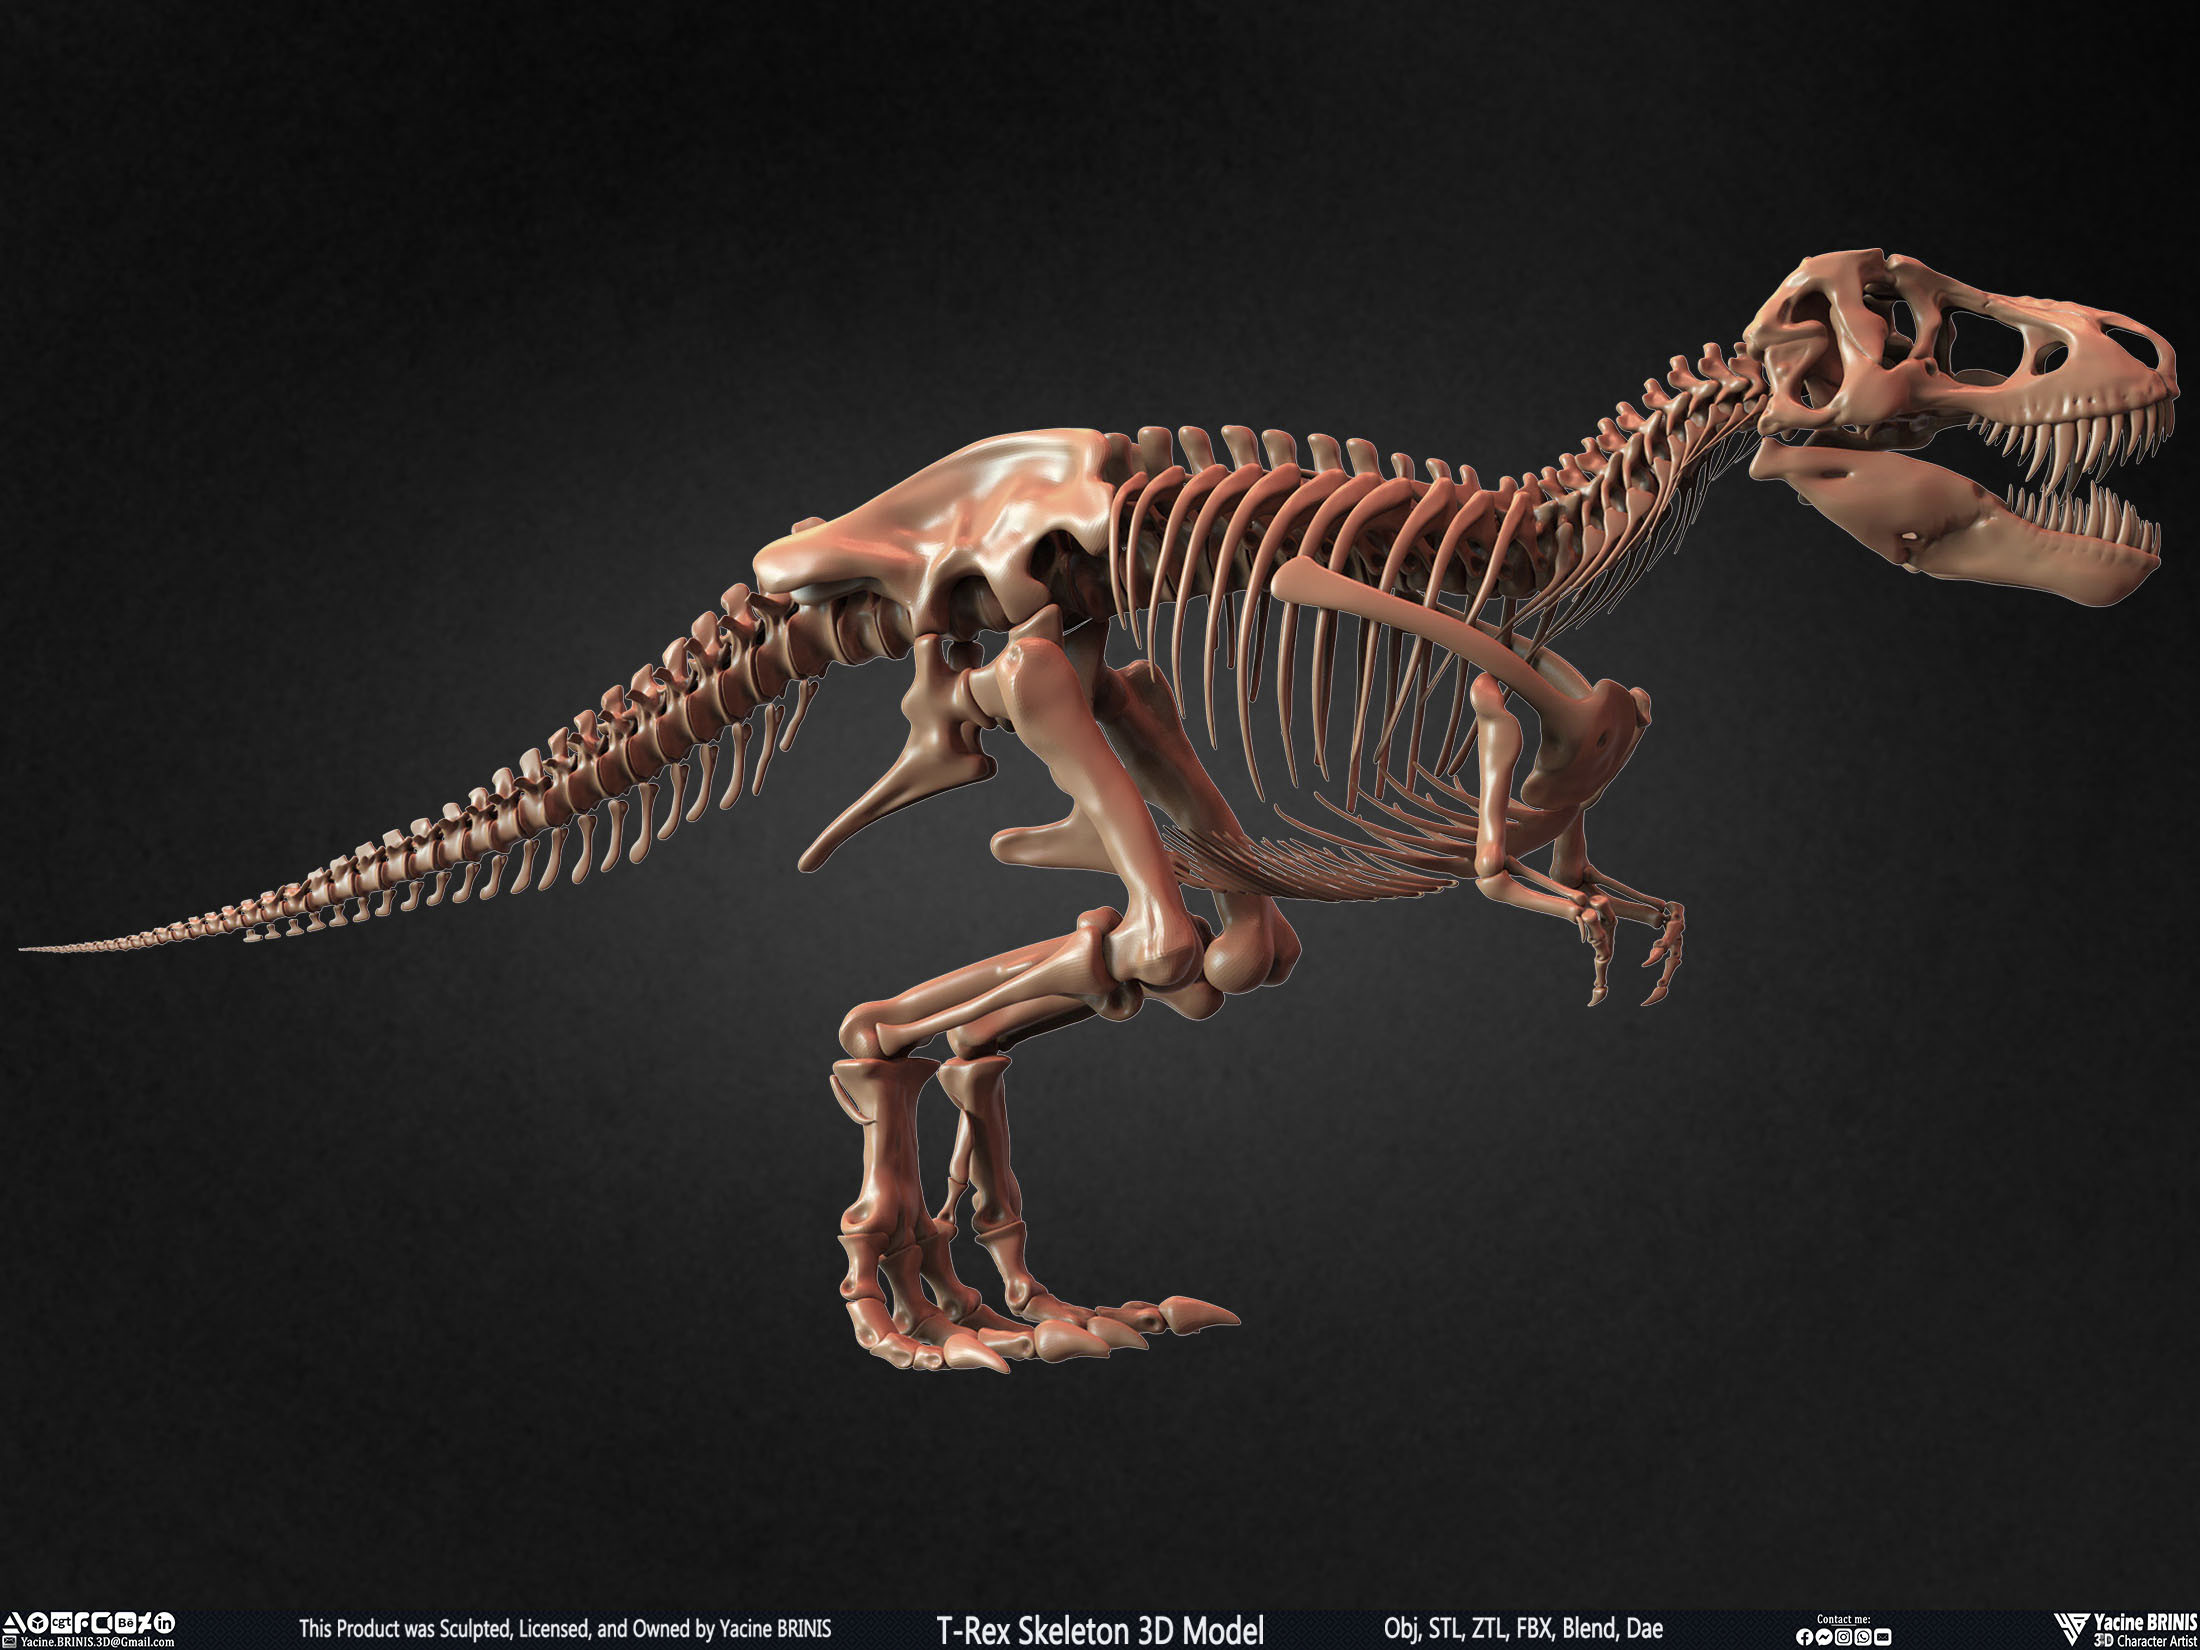 T-Rex Skeleton 3D Model (Tyrannosaurus Rex) Sculpted By Yacine BRINIS Set 006